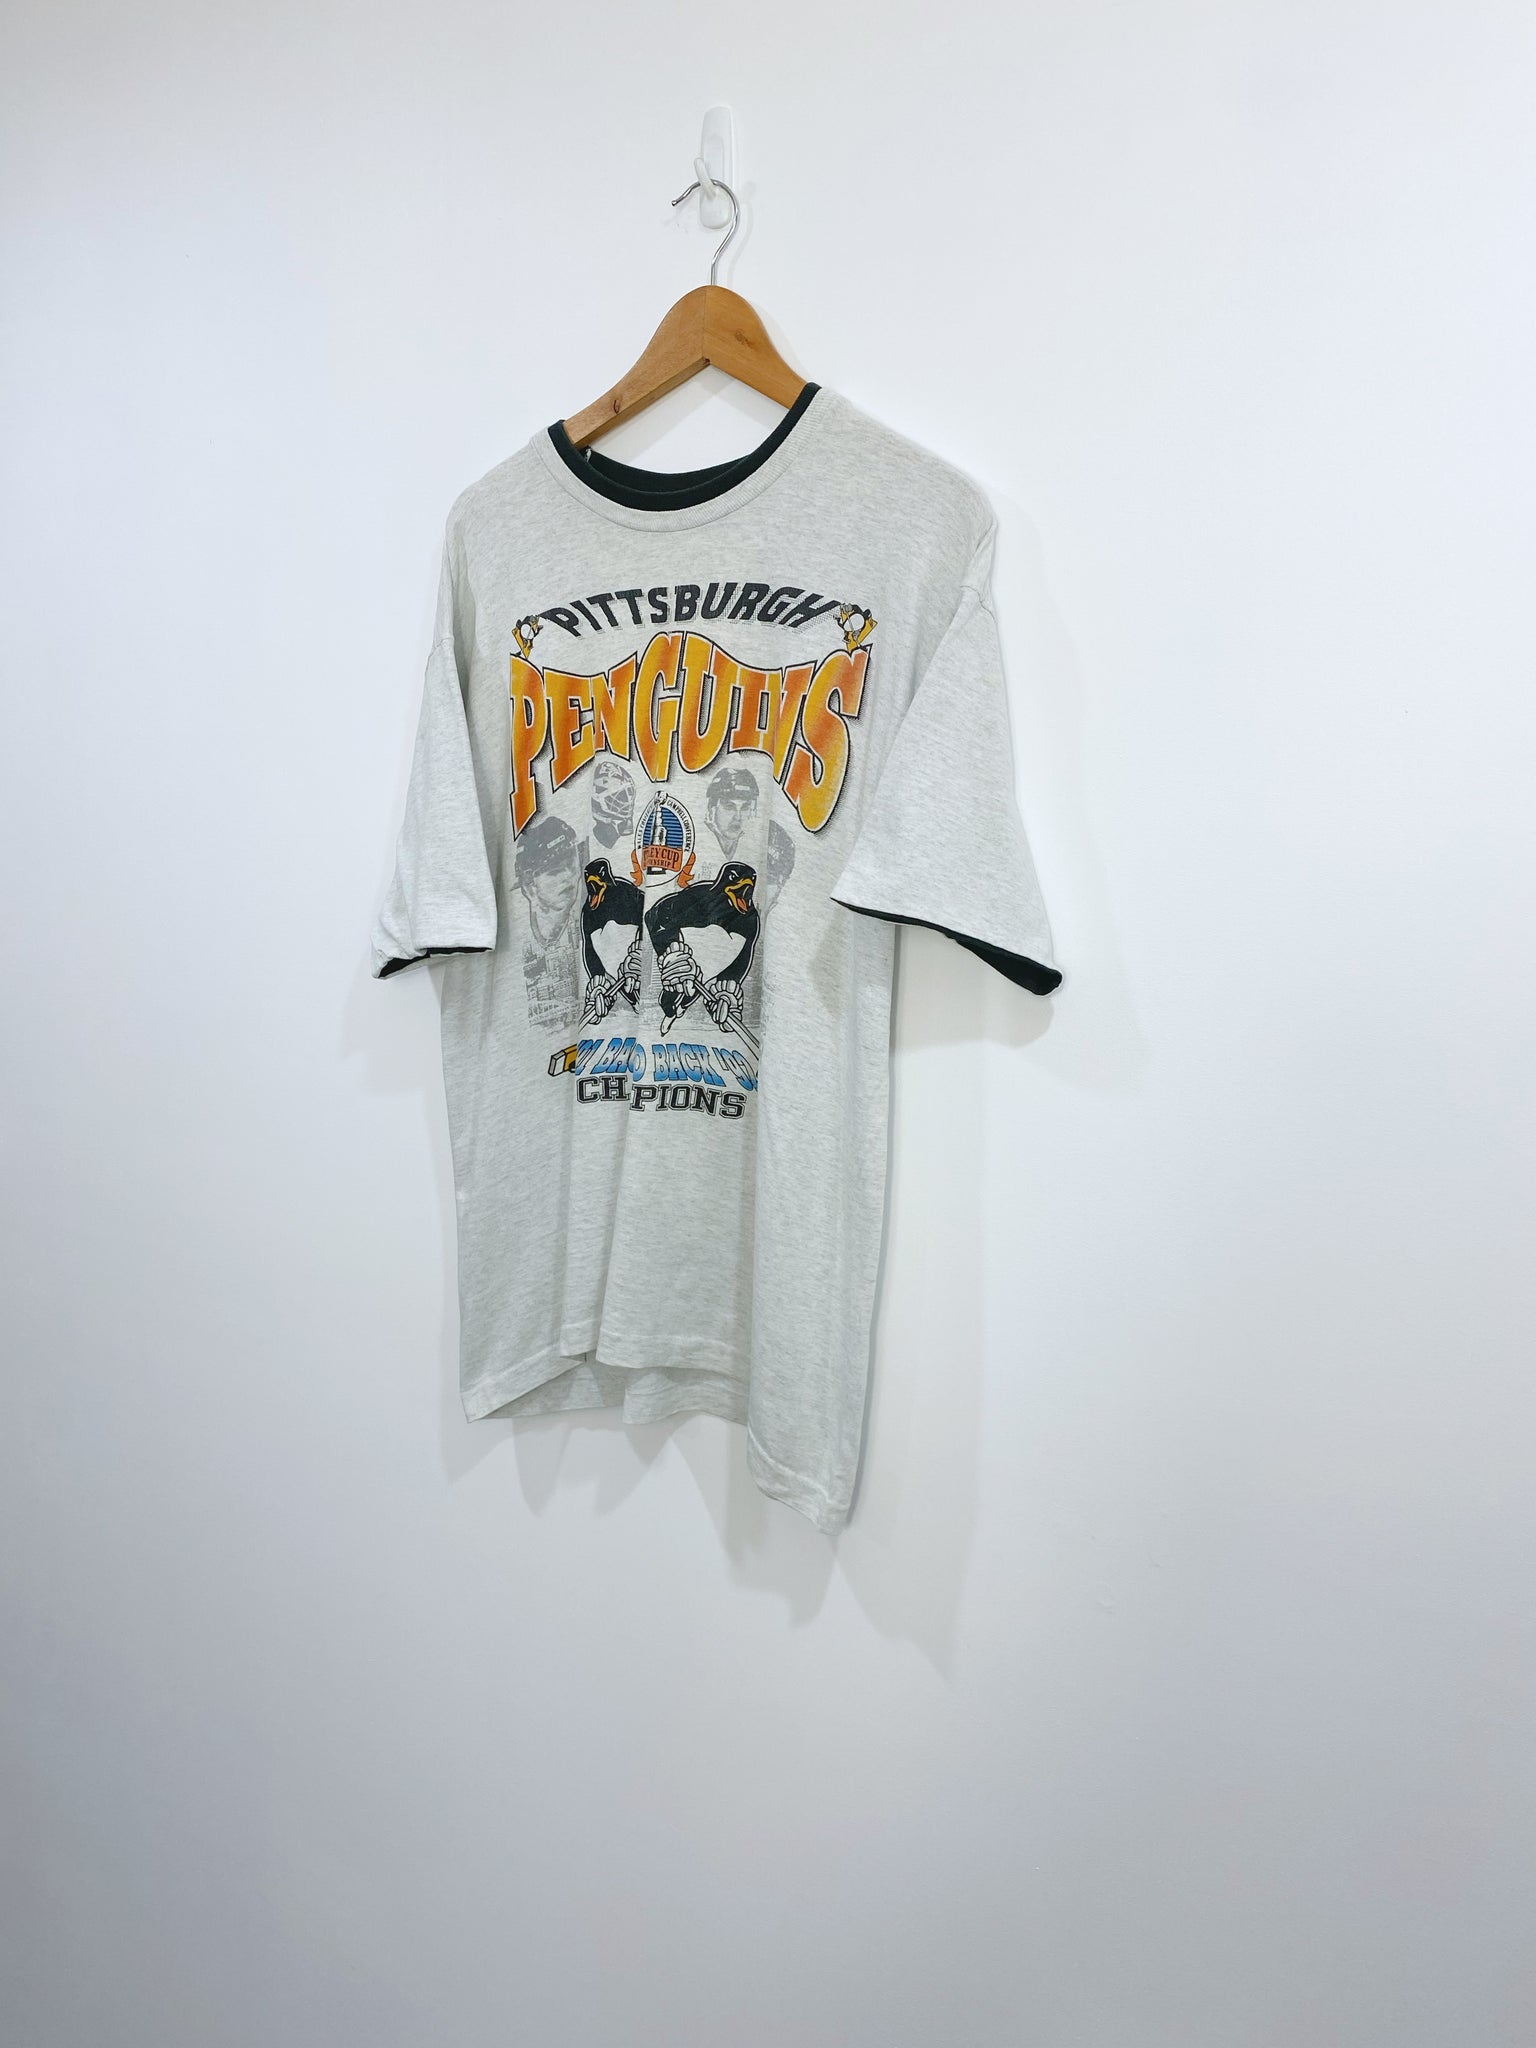 Vintage 1992 Pittsburgh Penguins Championship T-shirt M